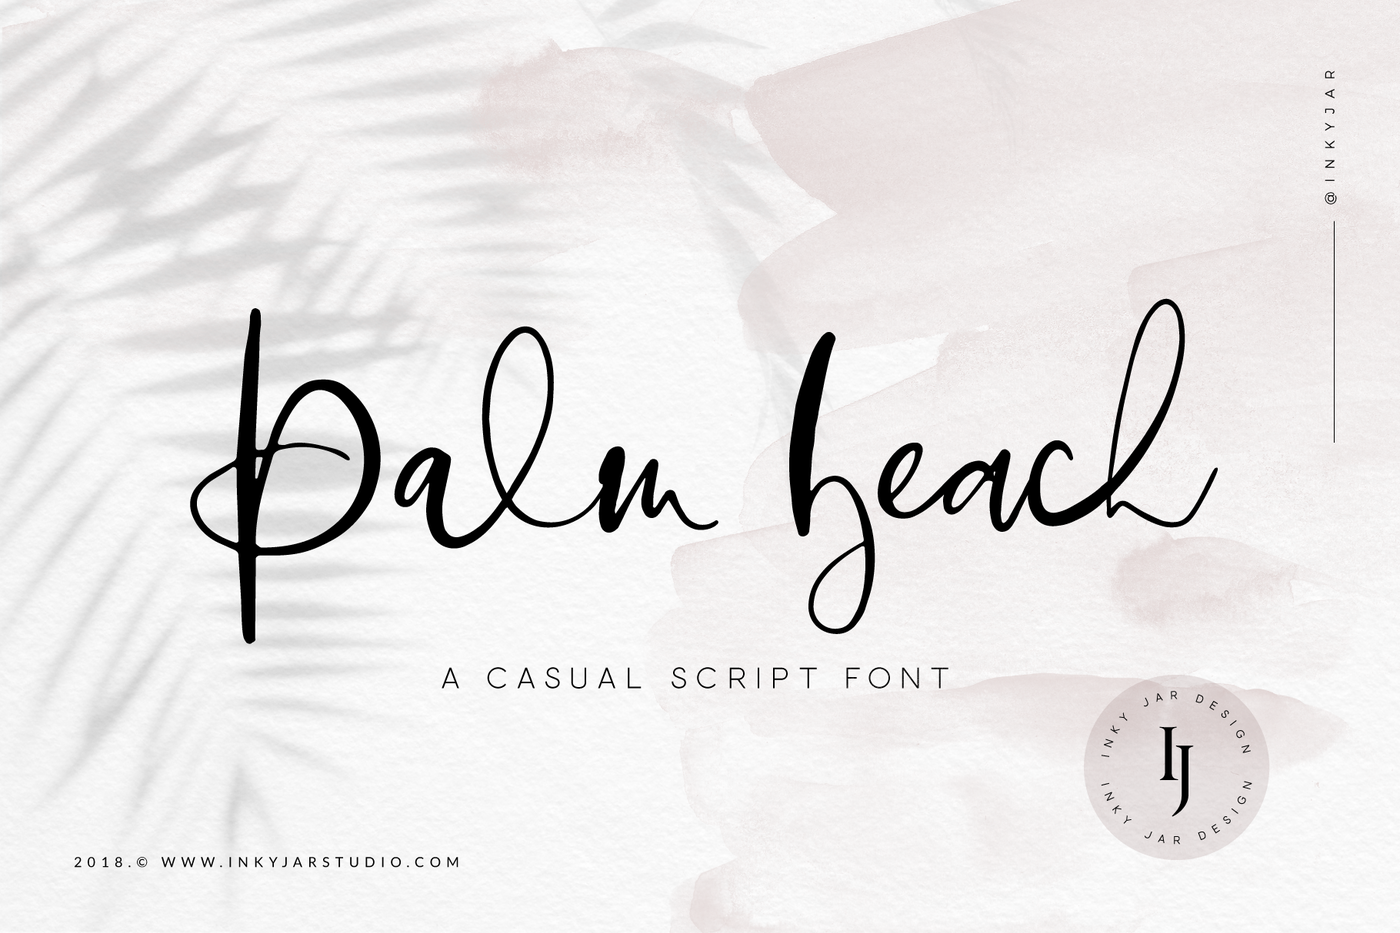 Palm Beach Casual Script Font By Inky Jar Thehungryjpeg Com